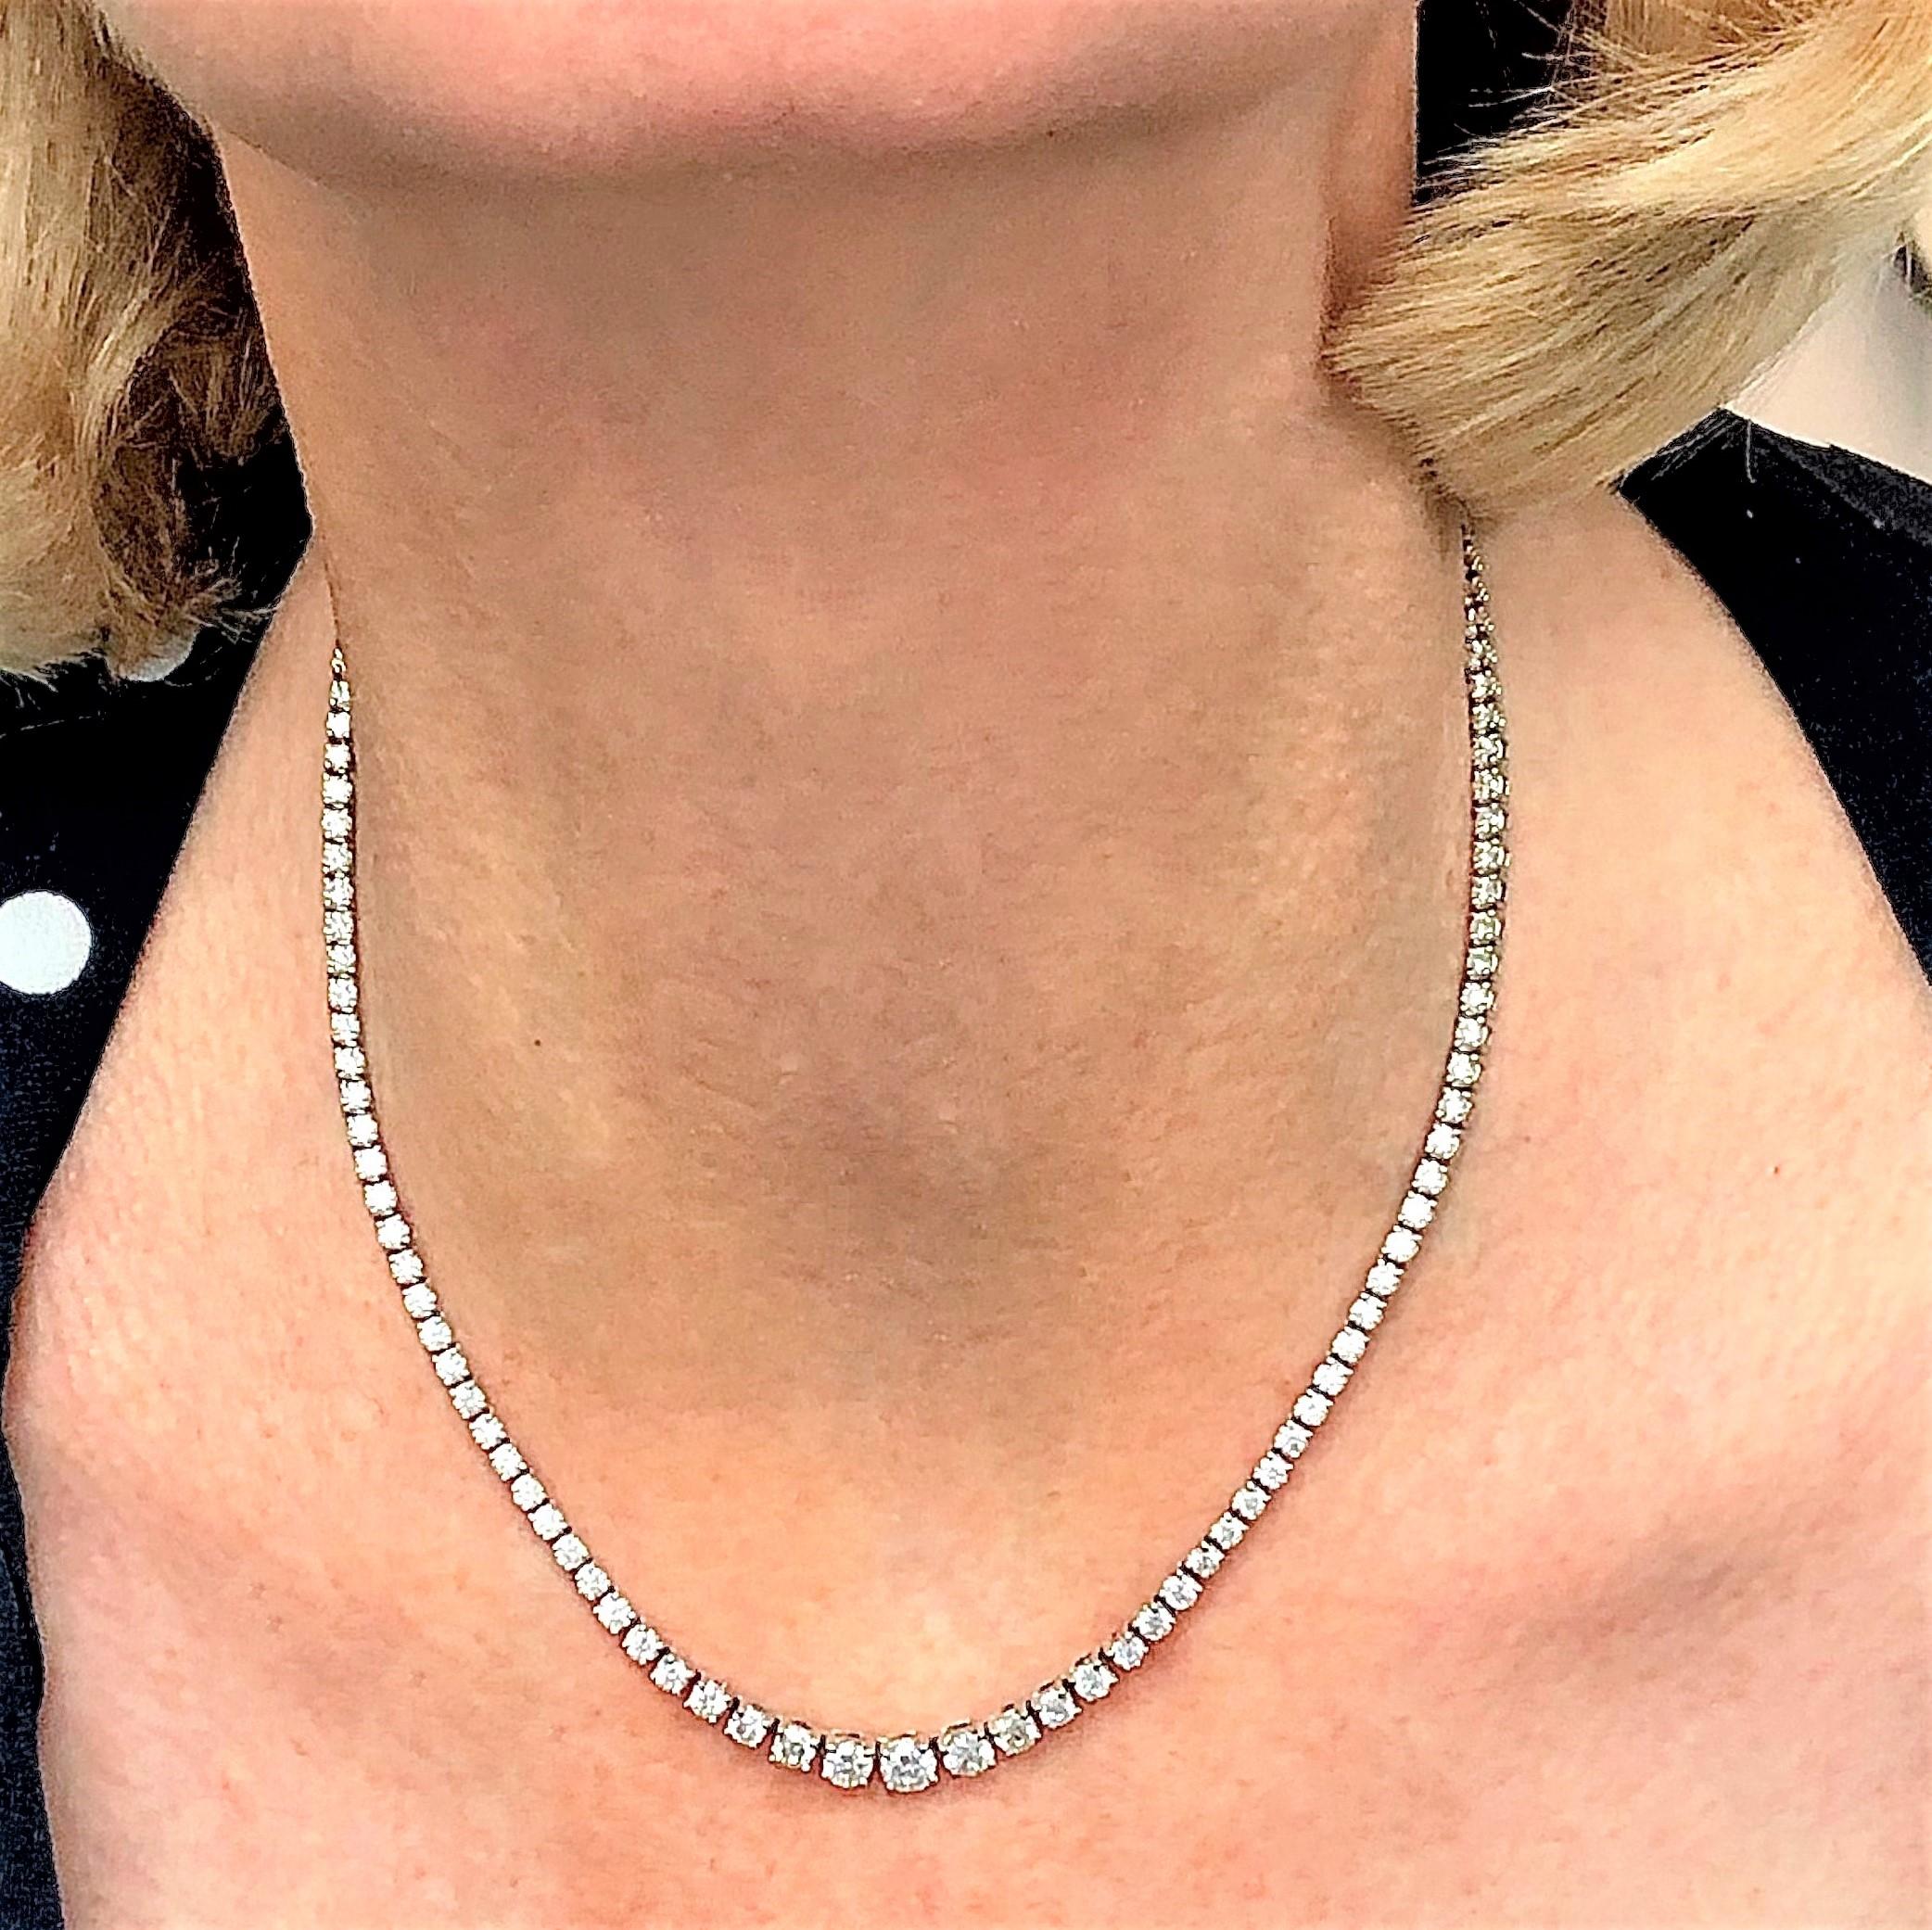 Women's Graduated Diamond Riviera Necklace Set in Platinum 9.78 Carat Total Weight